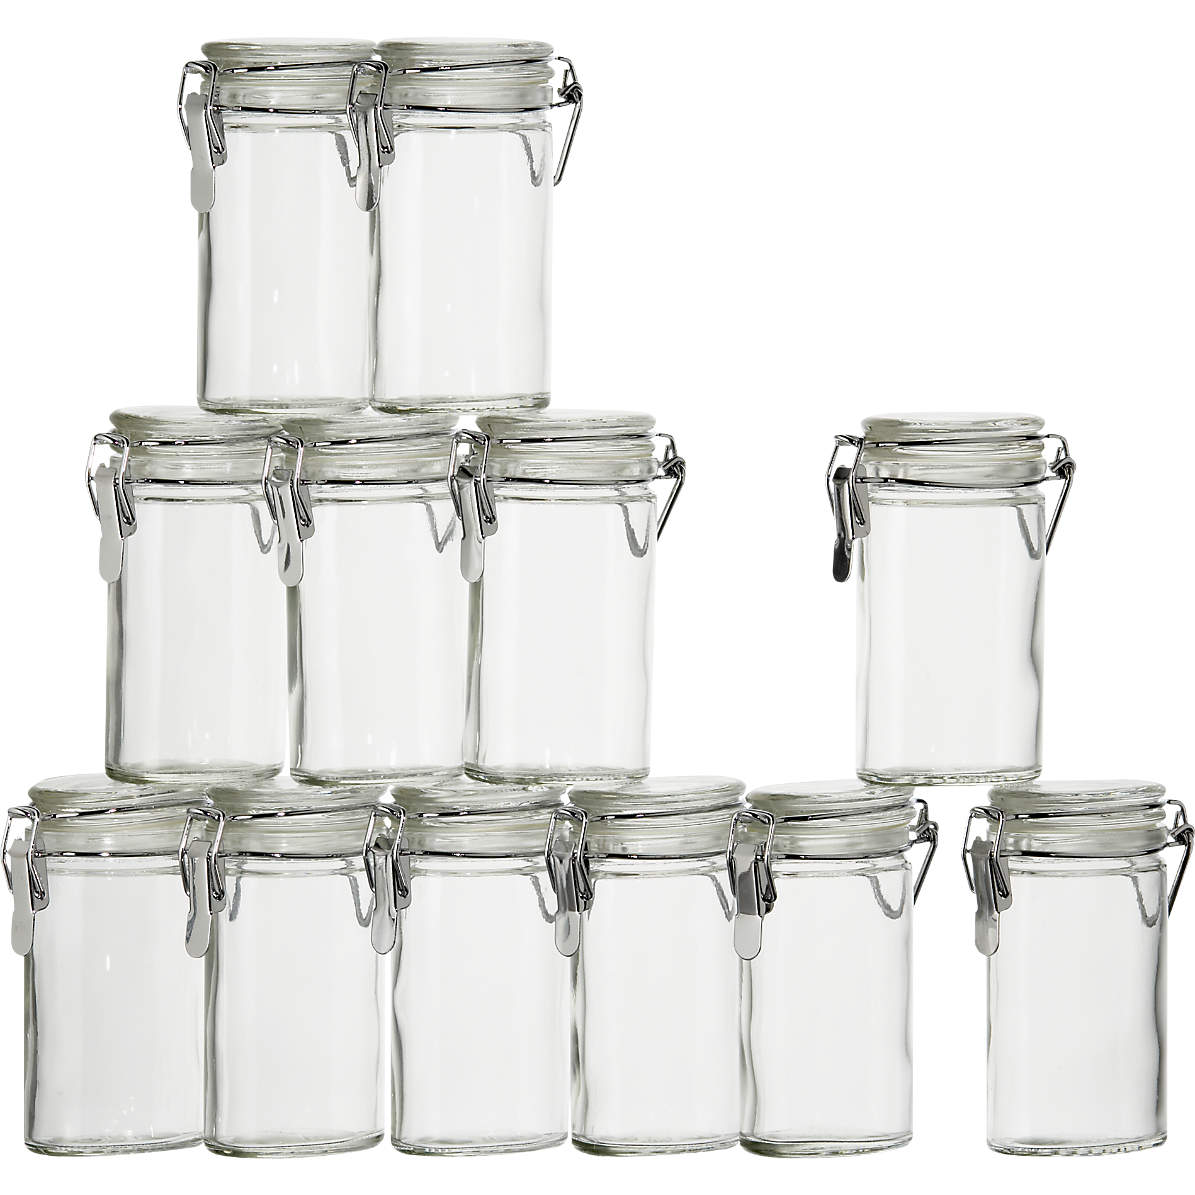 oval spice jars